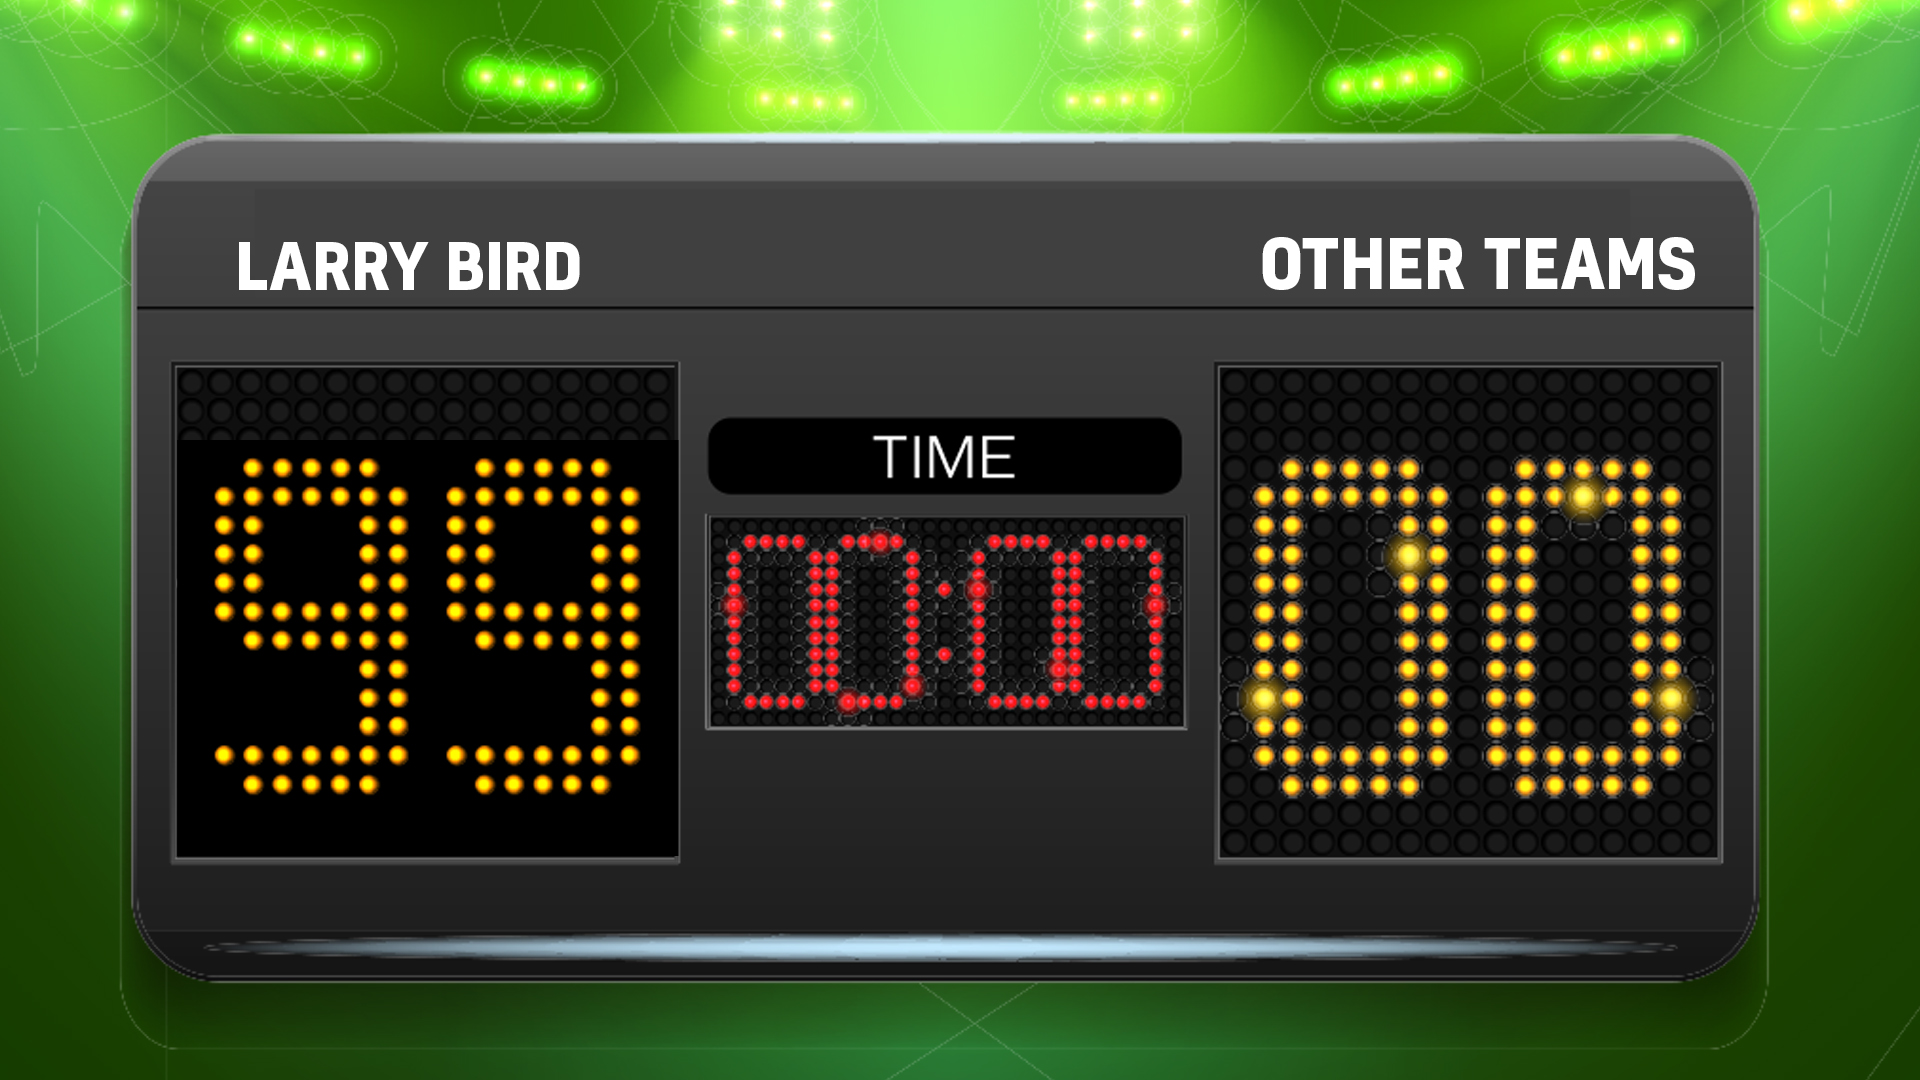 A basketball scoreboard